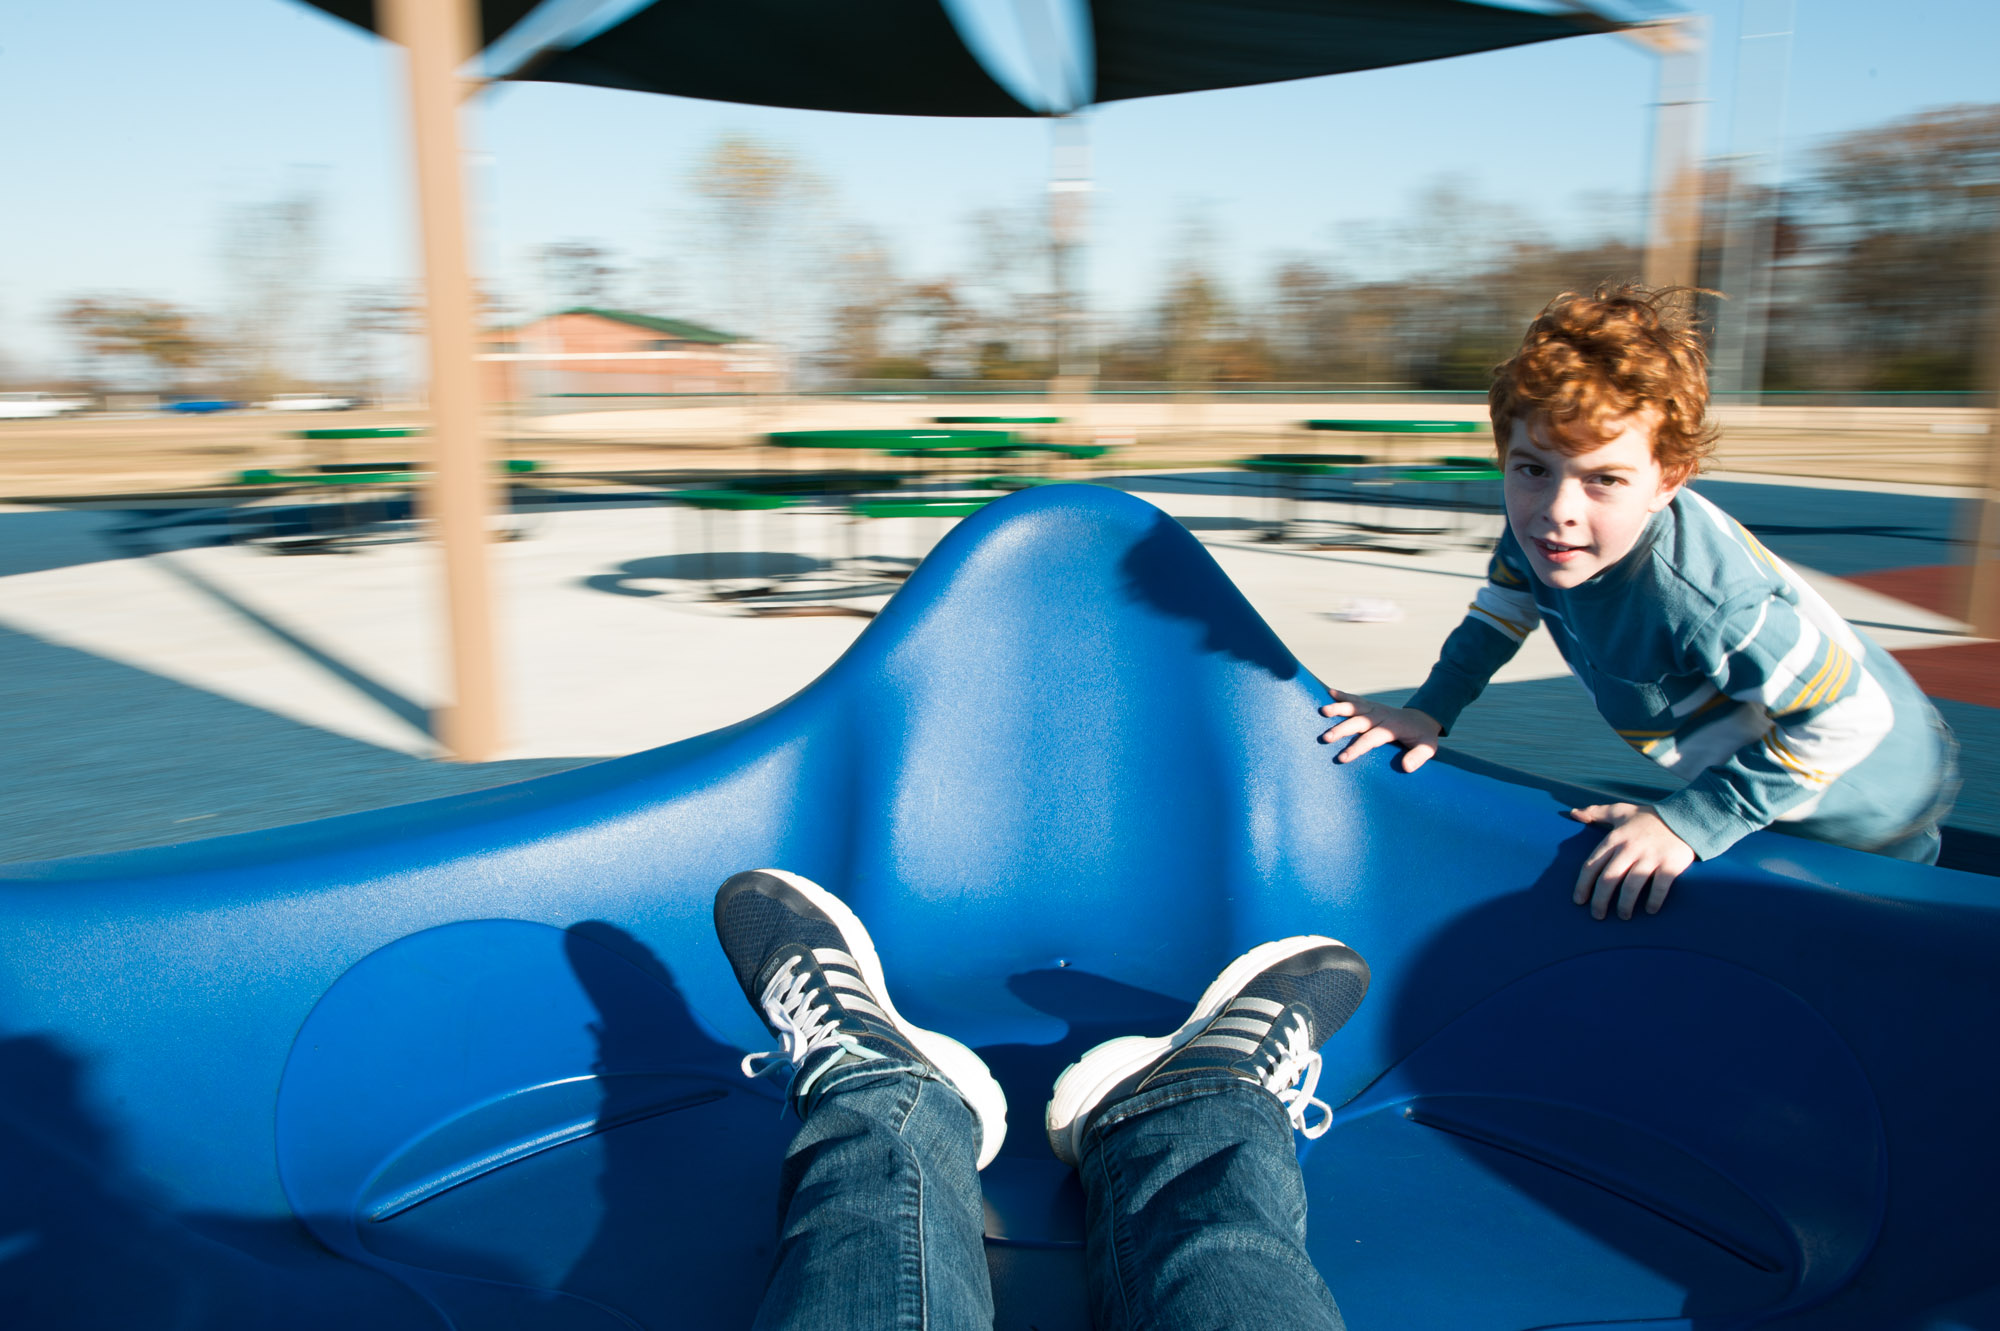 kid spinning playground equipment - documentary family photography